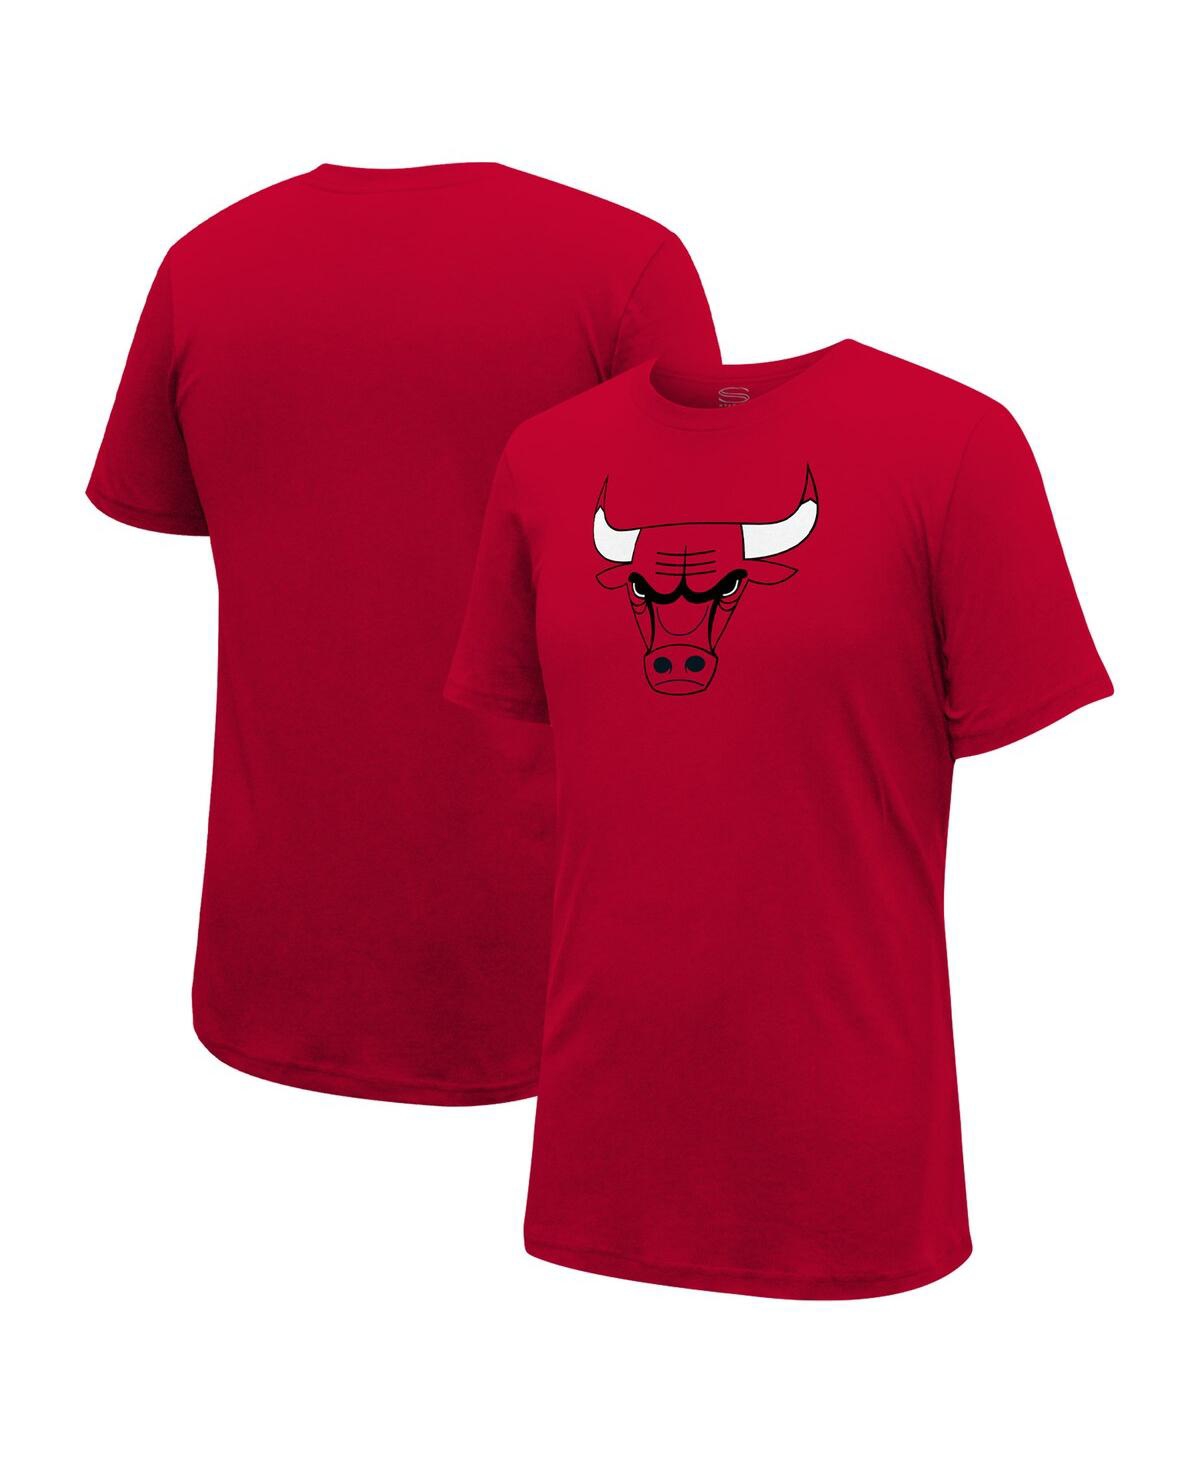 Men's and Women's Stadium Essentials Red Chicago Bulls Primary Logo T-shirt - Red